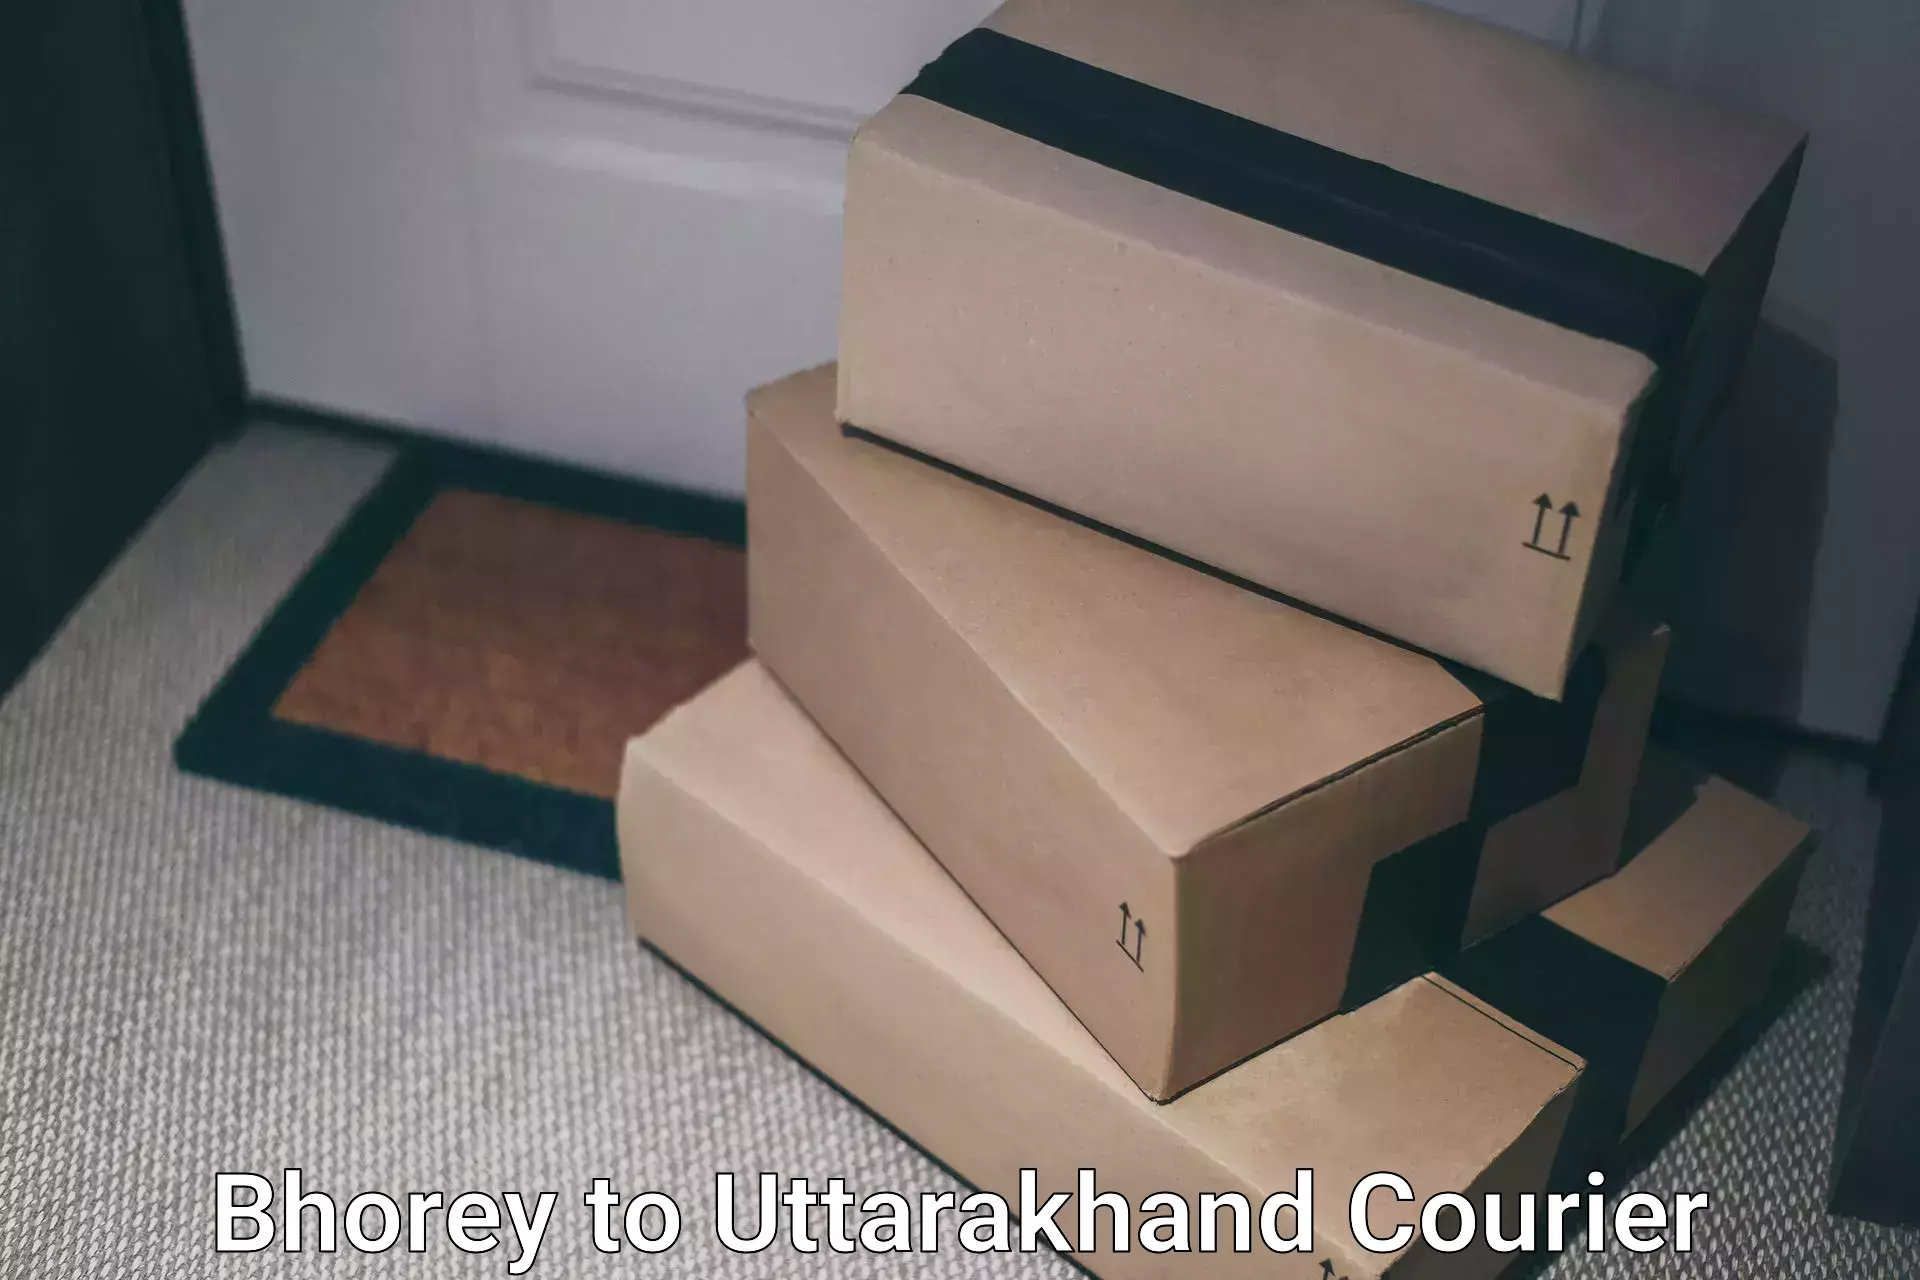 On-demand delivery Bhorey to Uttarakhand